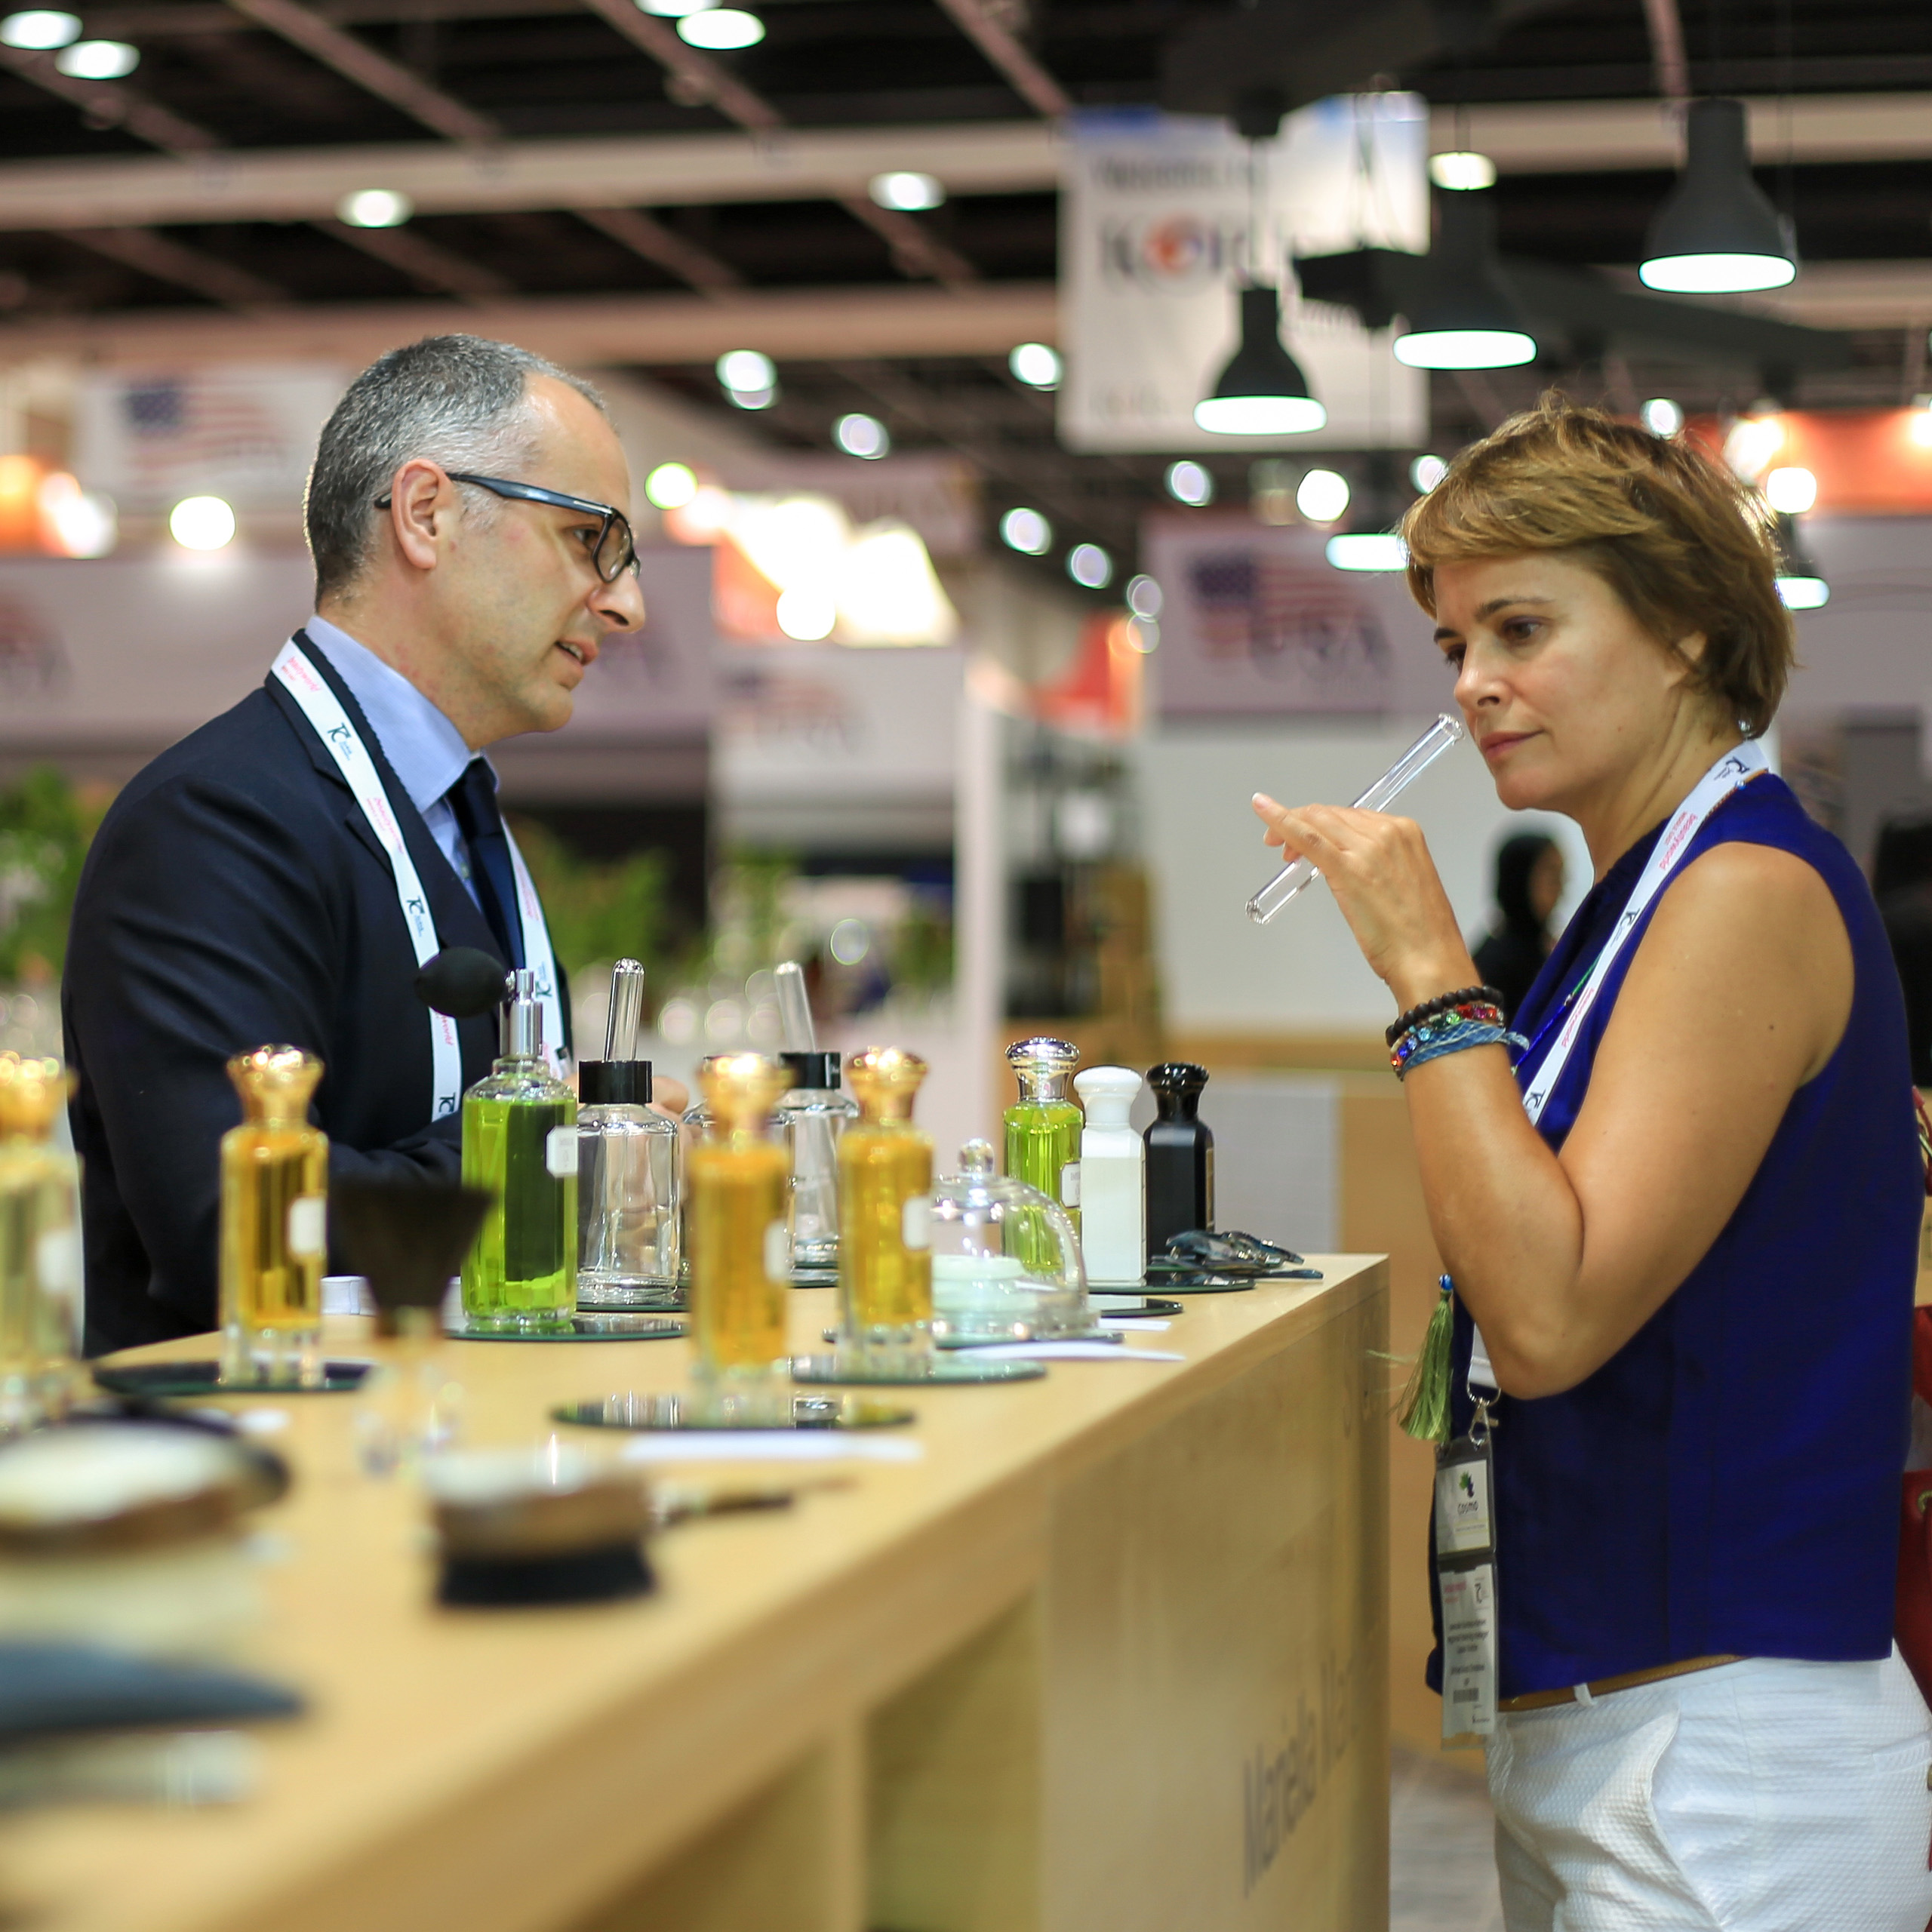 Dubai perfumes and cosmetics trade valued at AED20.51 billion in 2015 – Dubai Customs